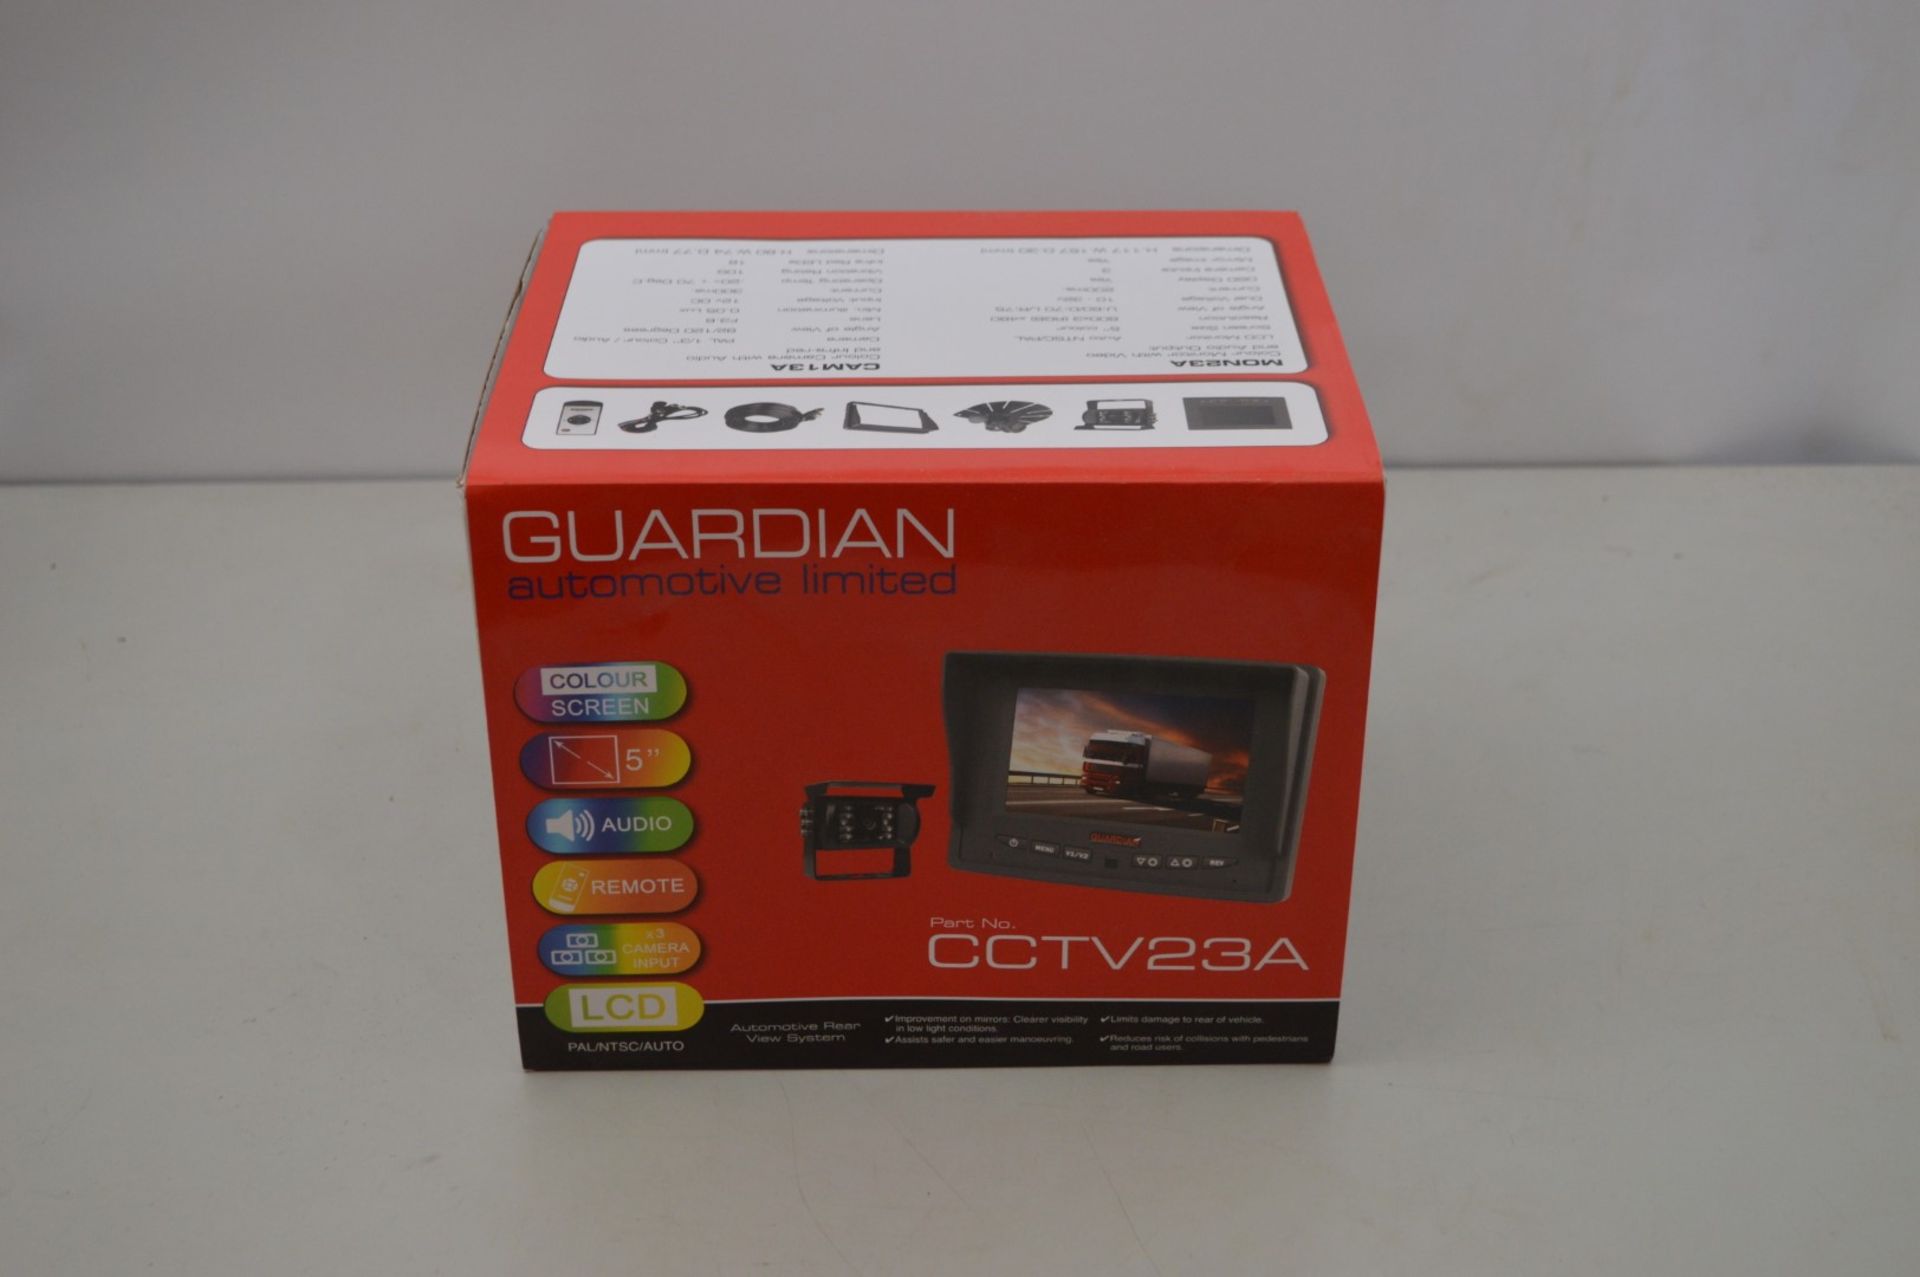 1 x Guardian CCTV23A Reverse Camera System - Ref RC153